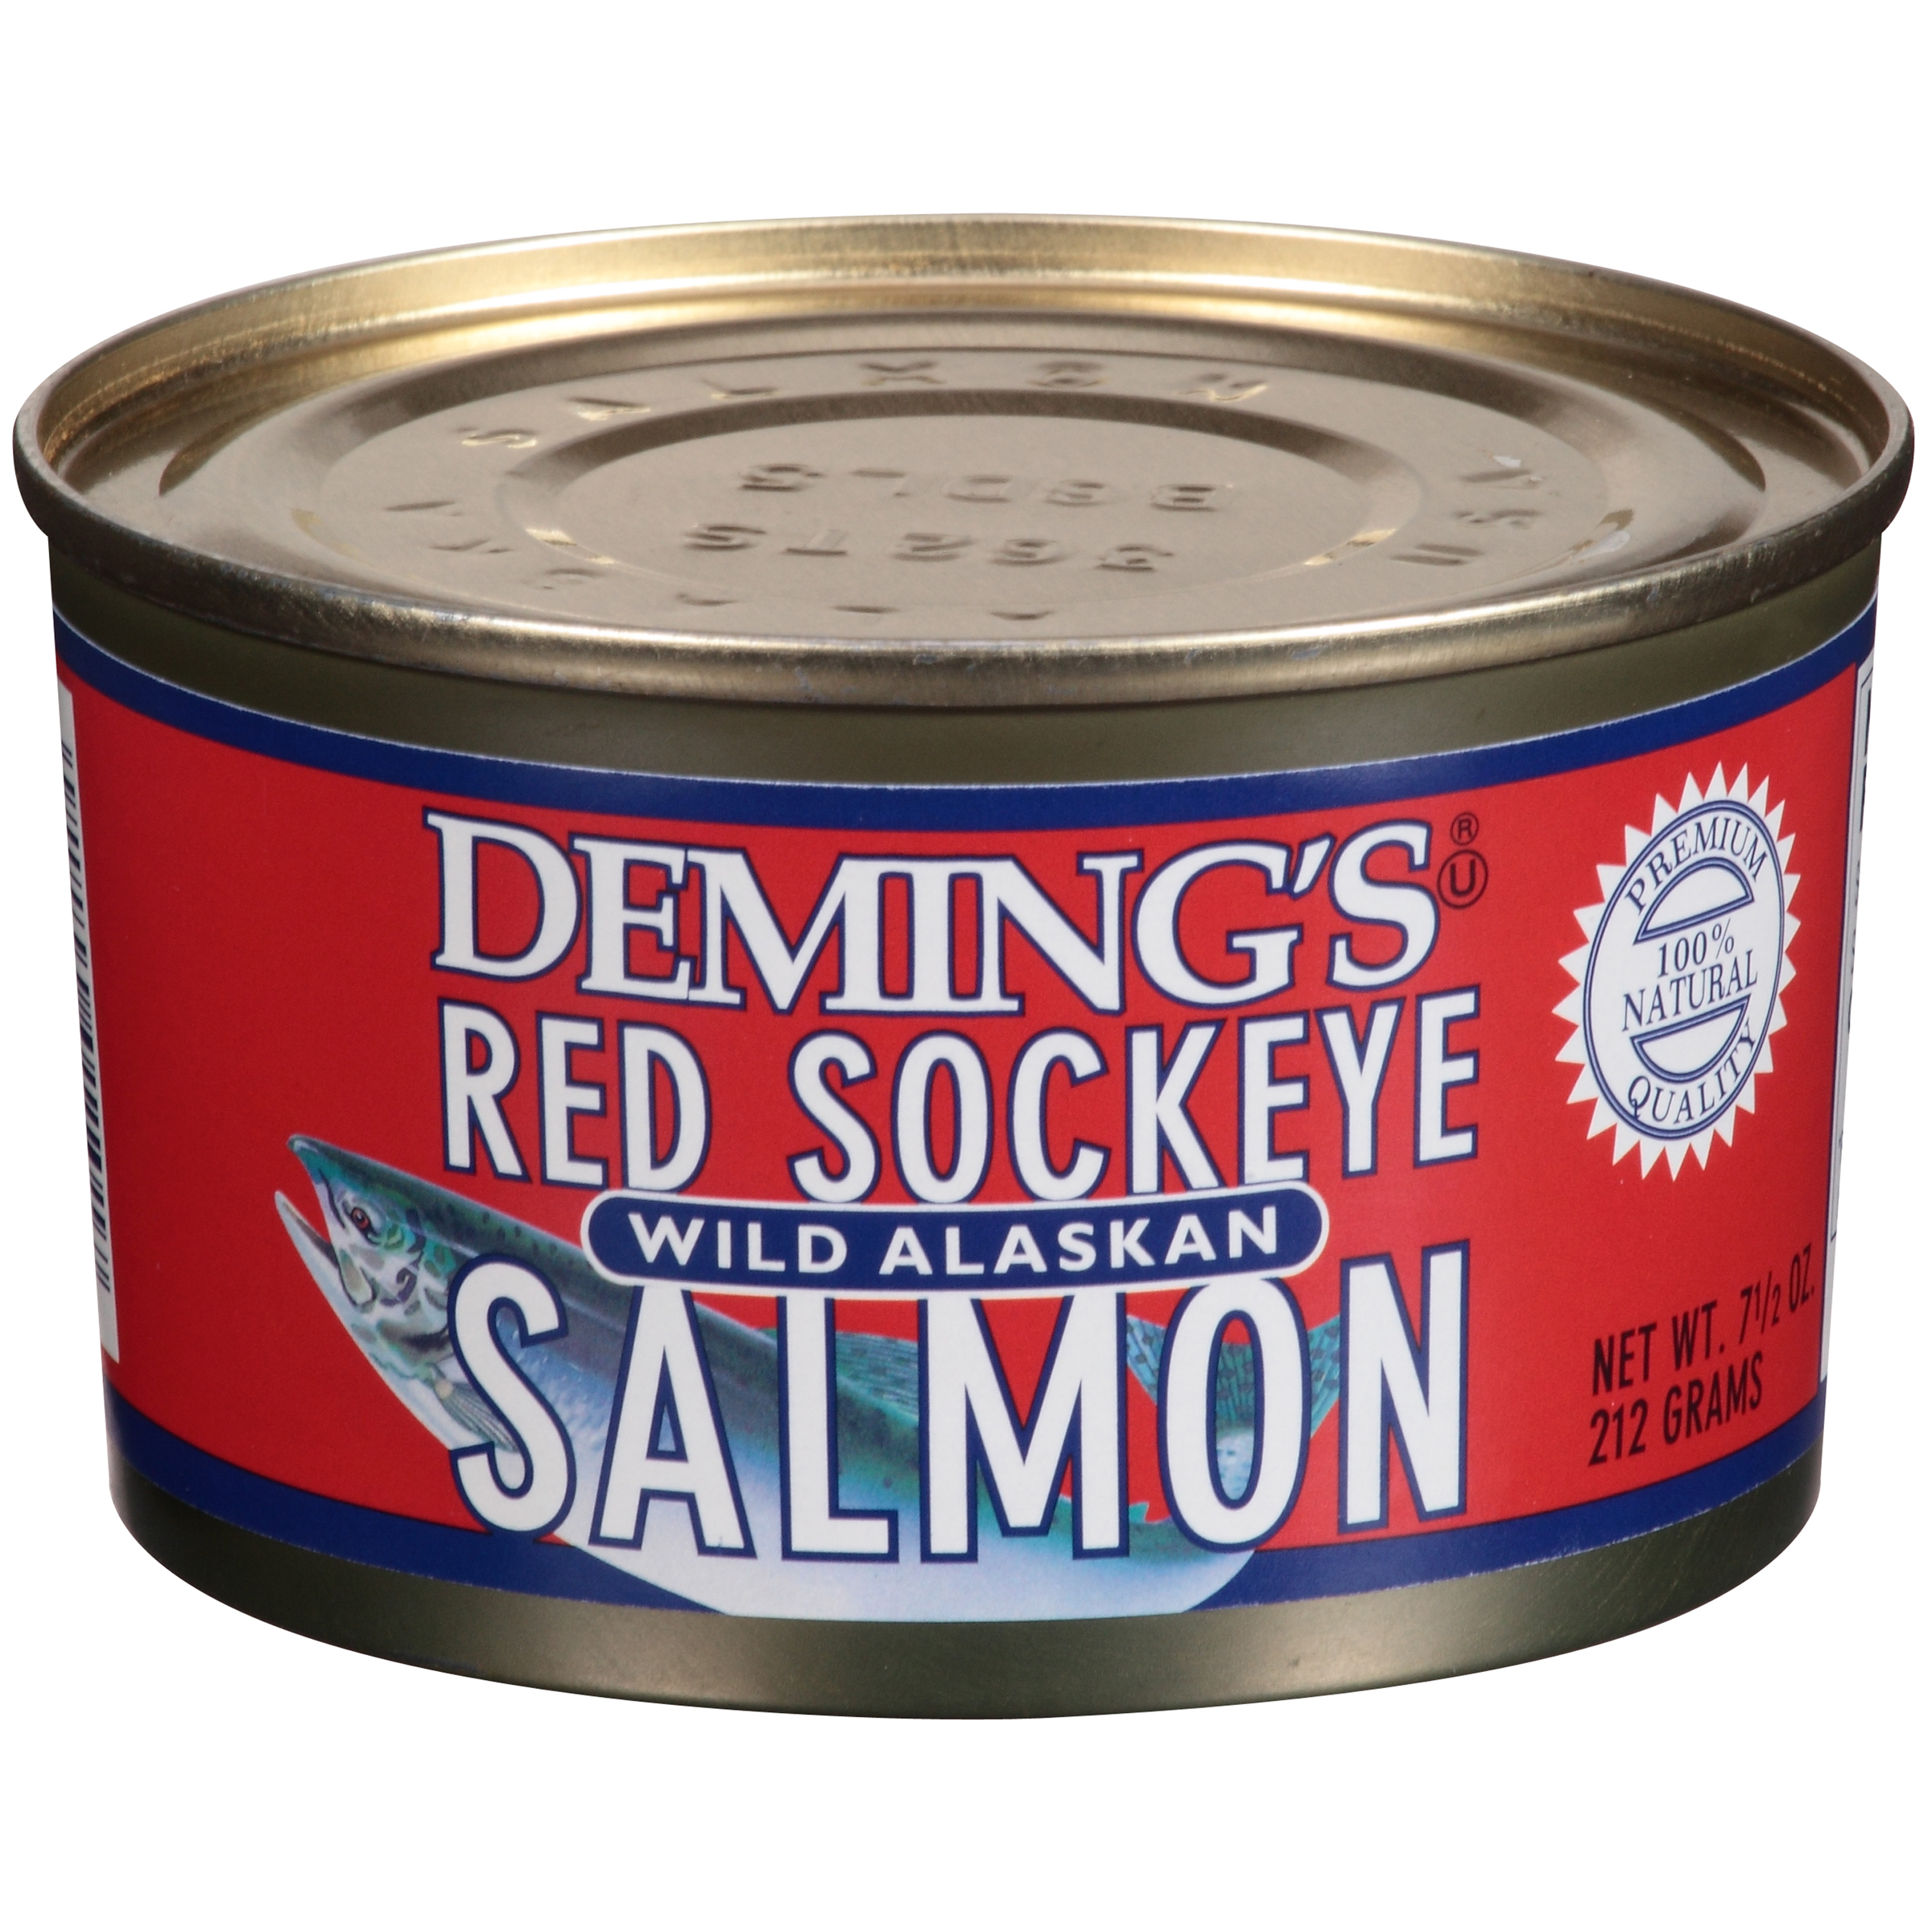 Deming's Wild Alaska Red Sockeye Salmon, 7.5 oz (212 g)